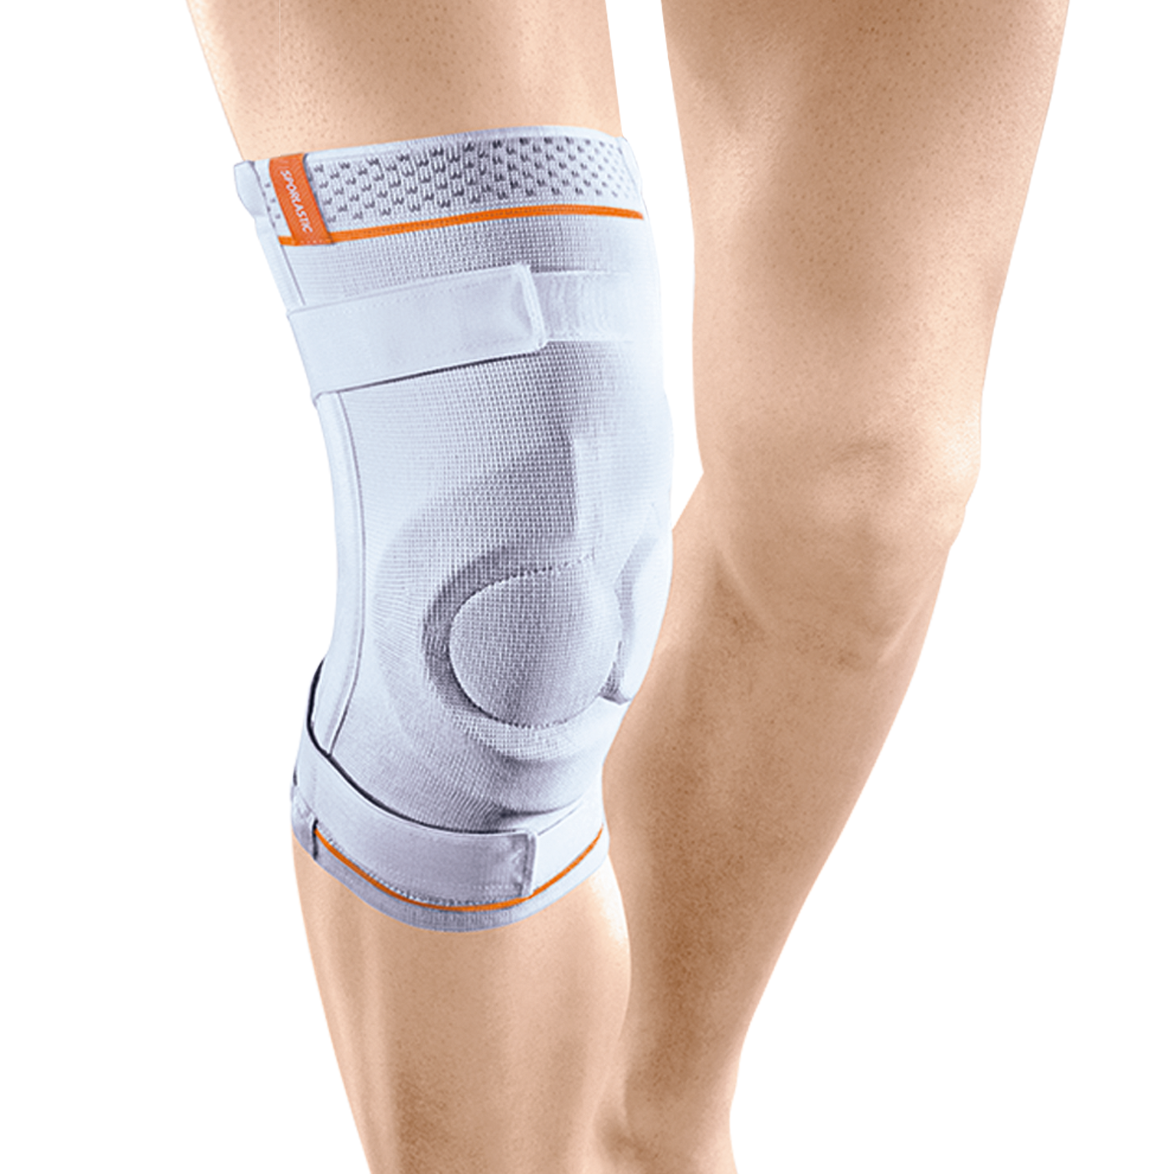 How PATELLADYN  Knee brace can help you?